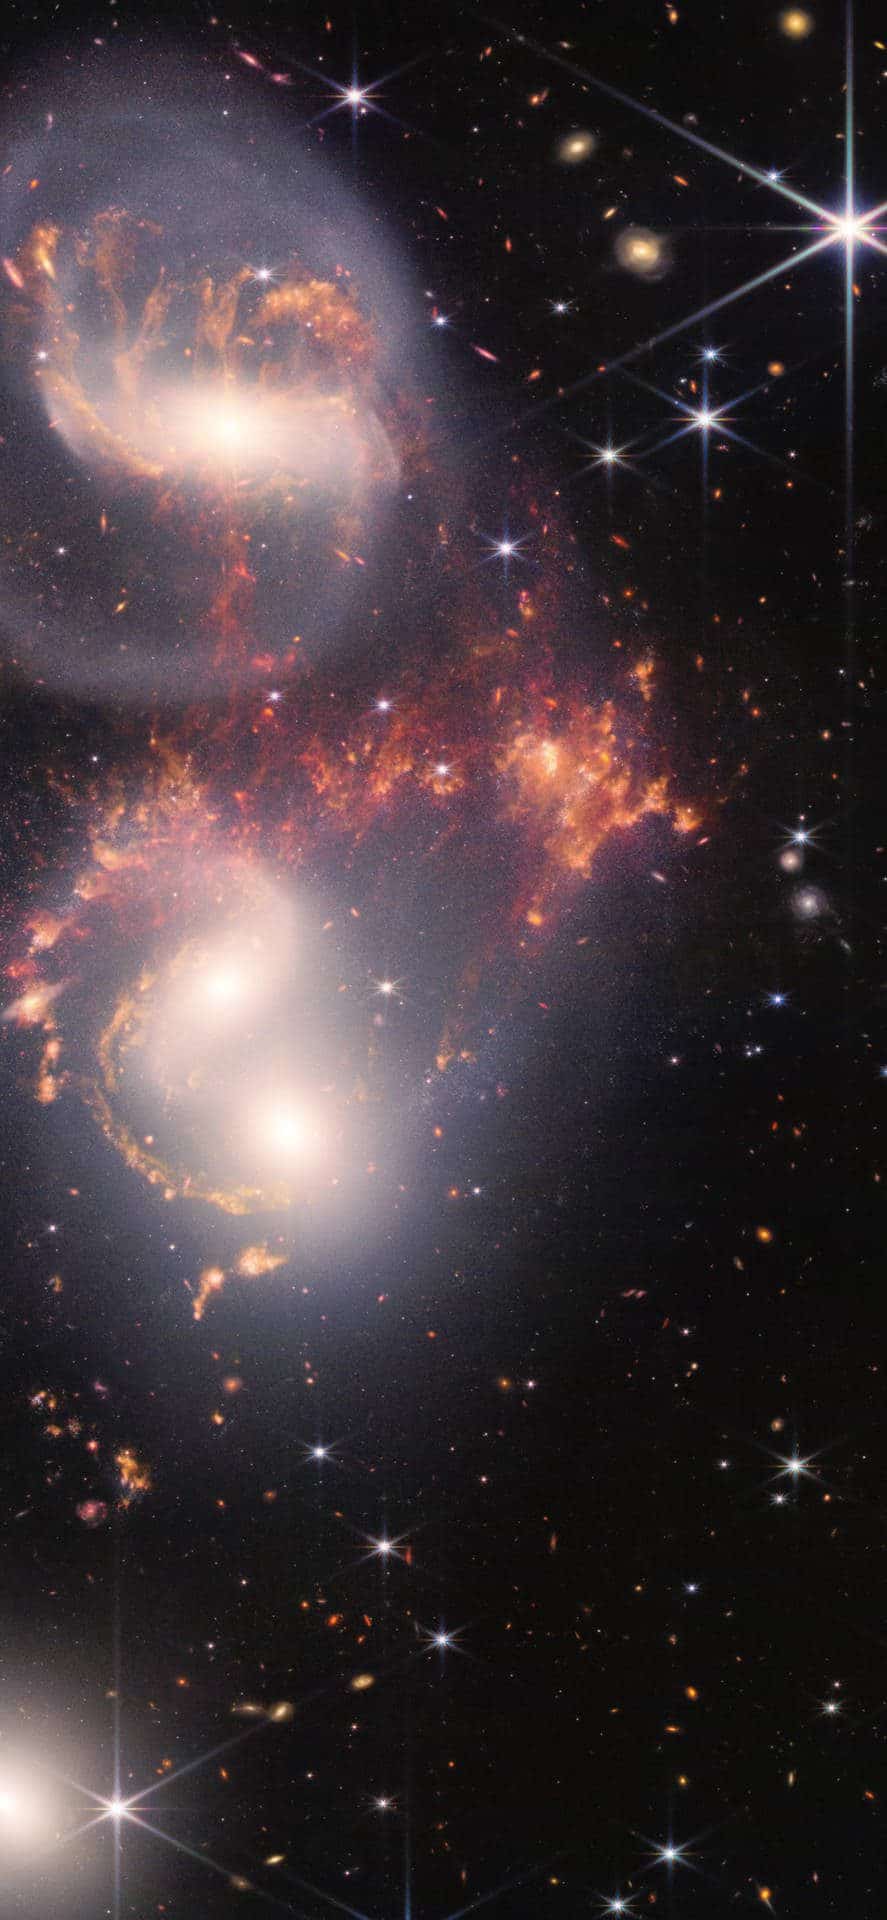 Obrázok ako pozadie pre iPhone z teleskopu Jamesa Webba